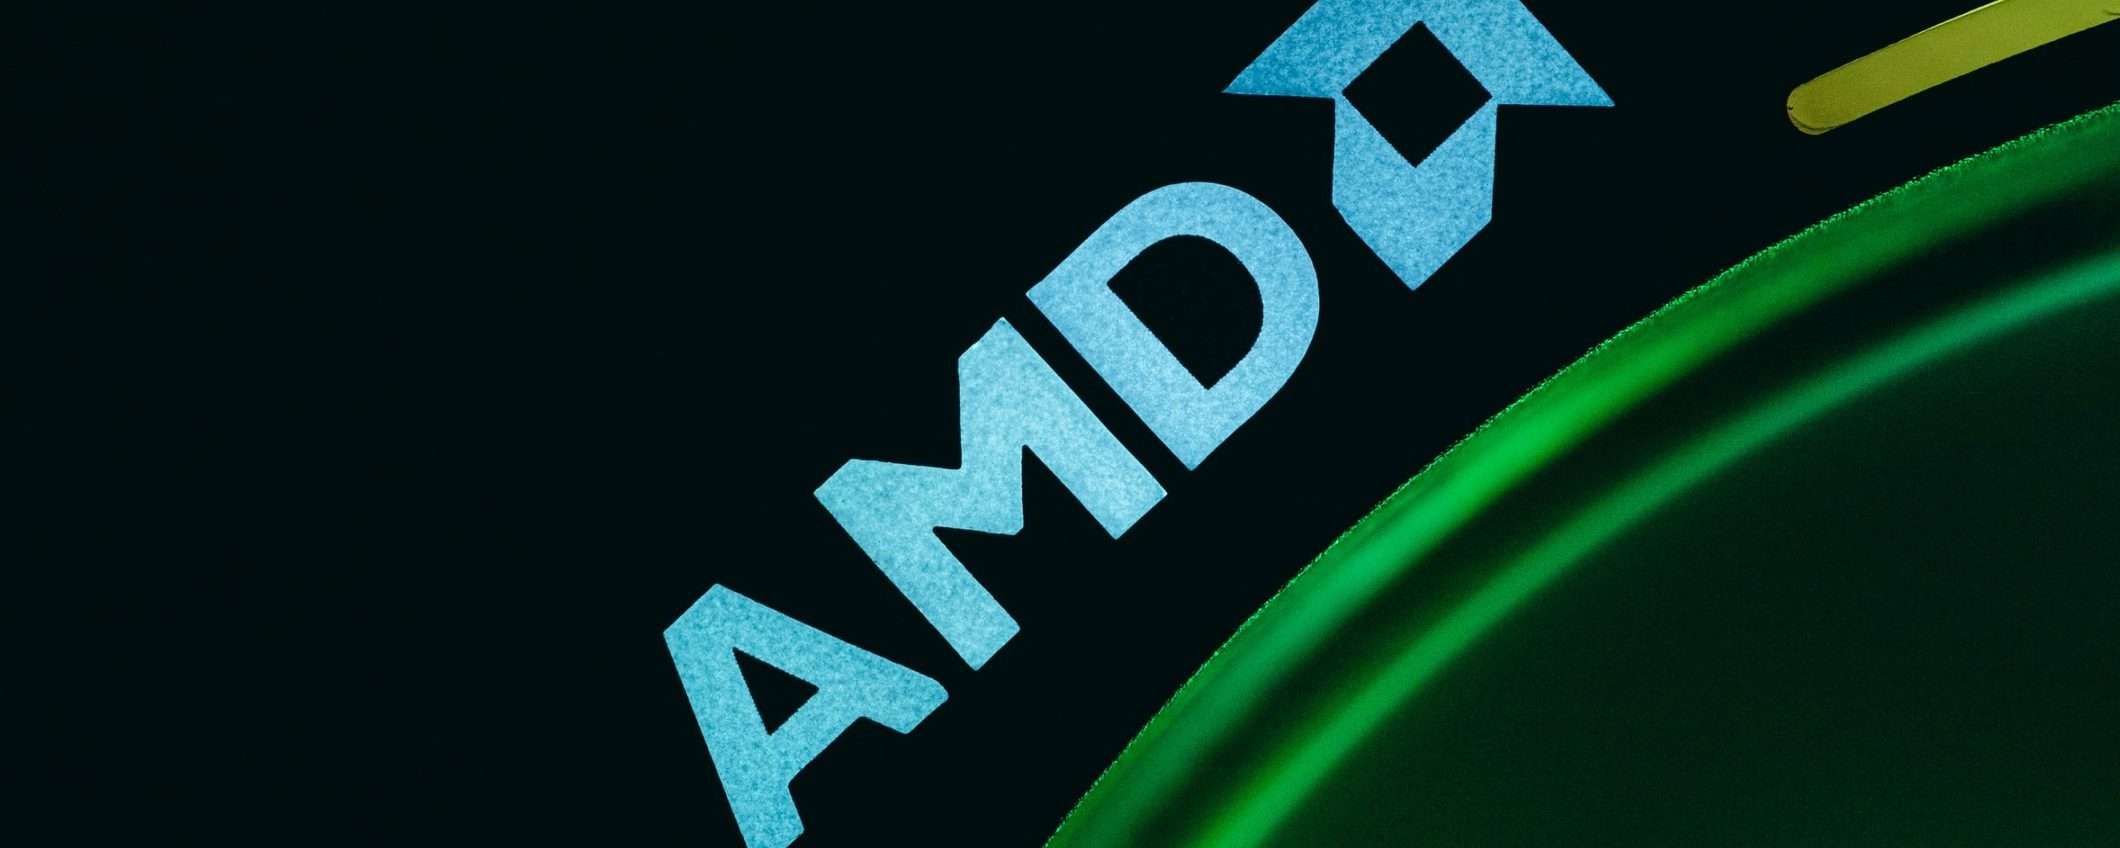 AMD svela la roadmap per CPU e GPU fino al 2024